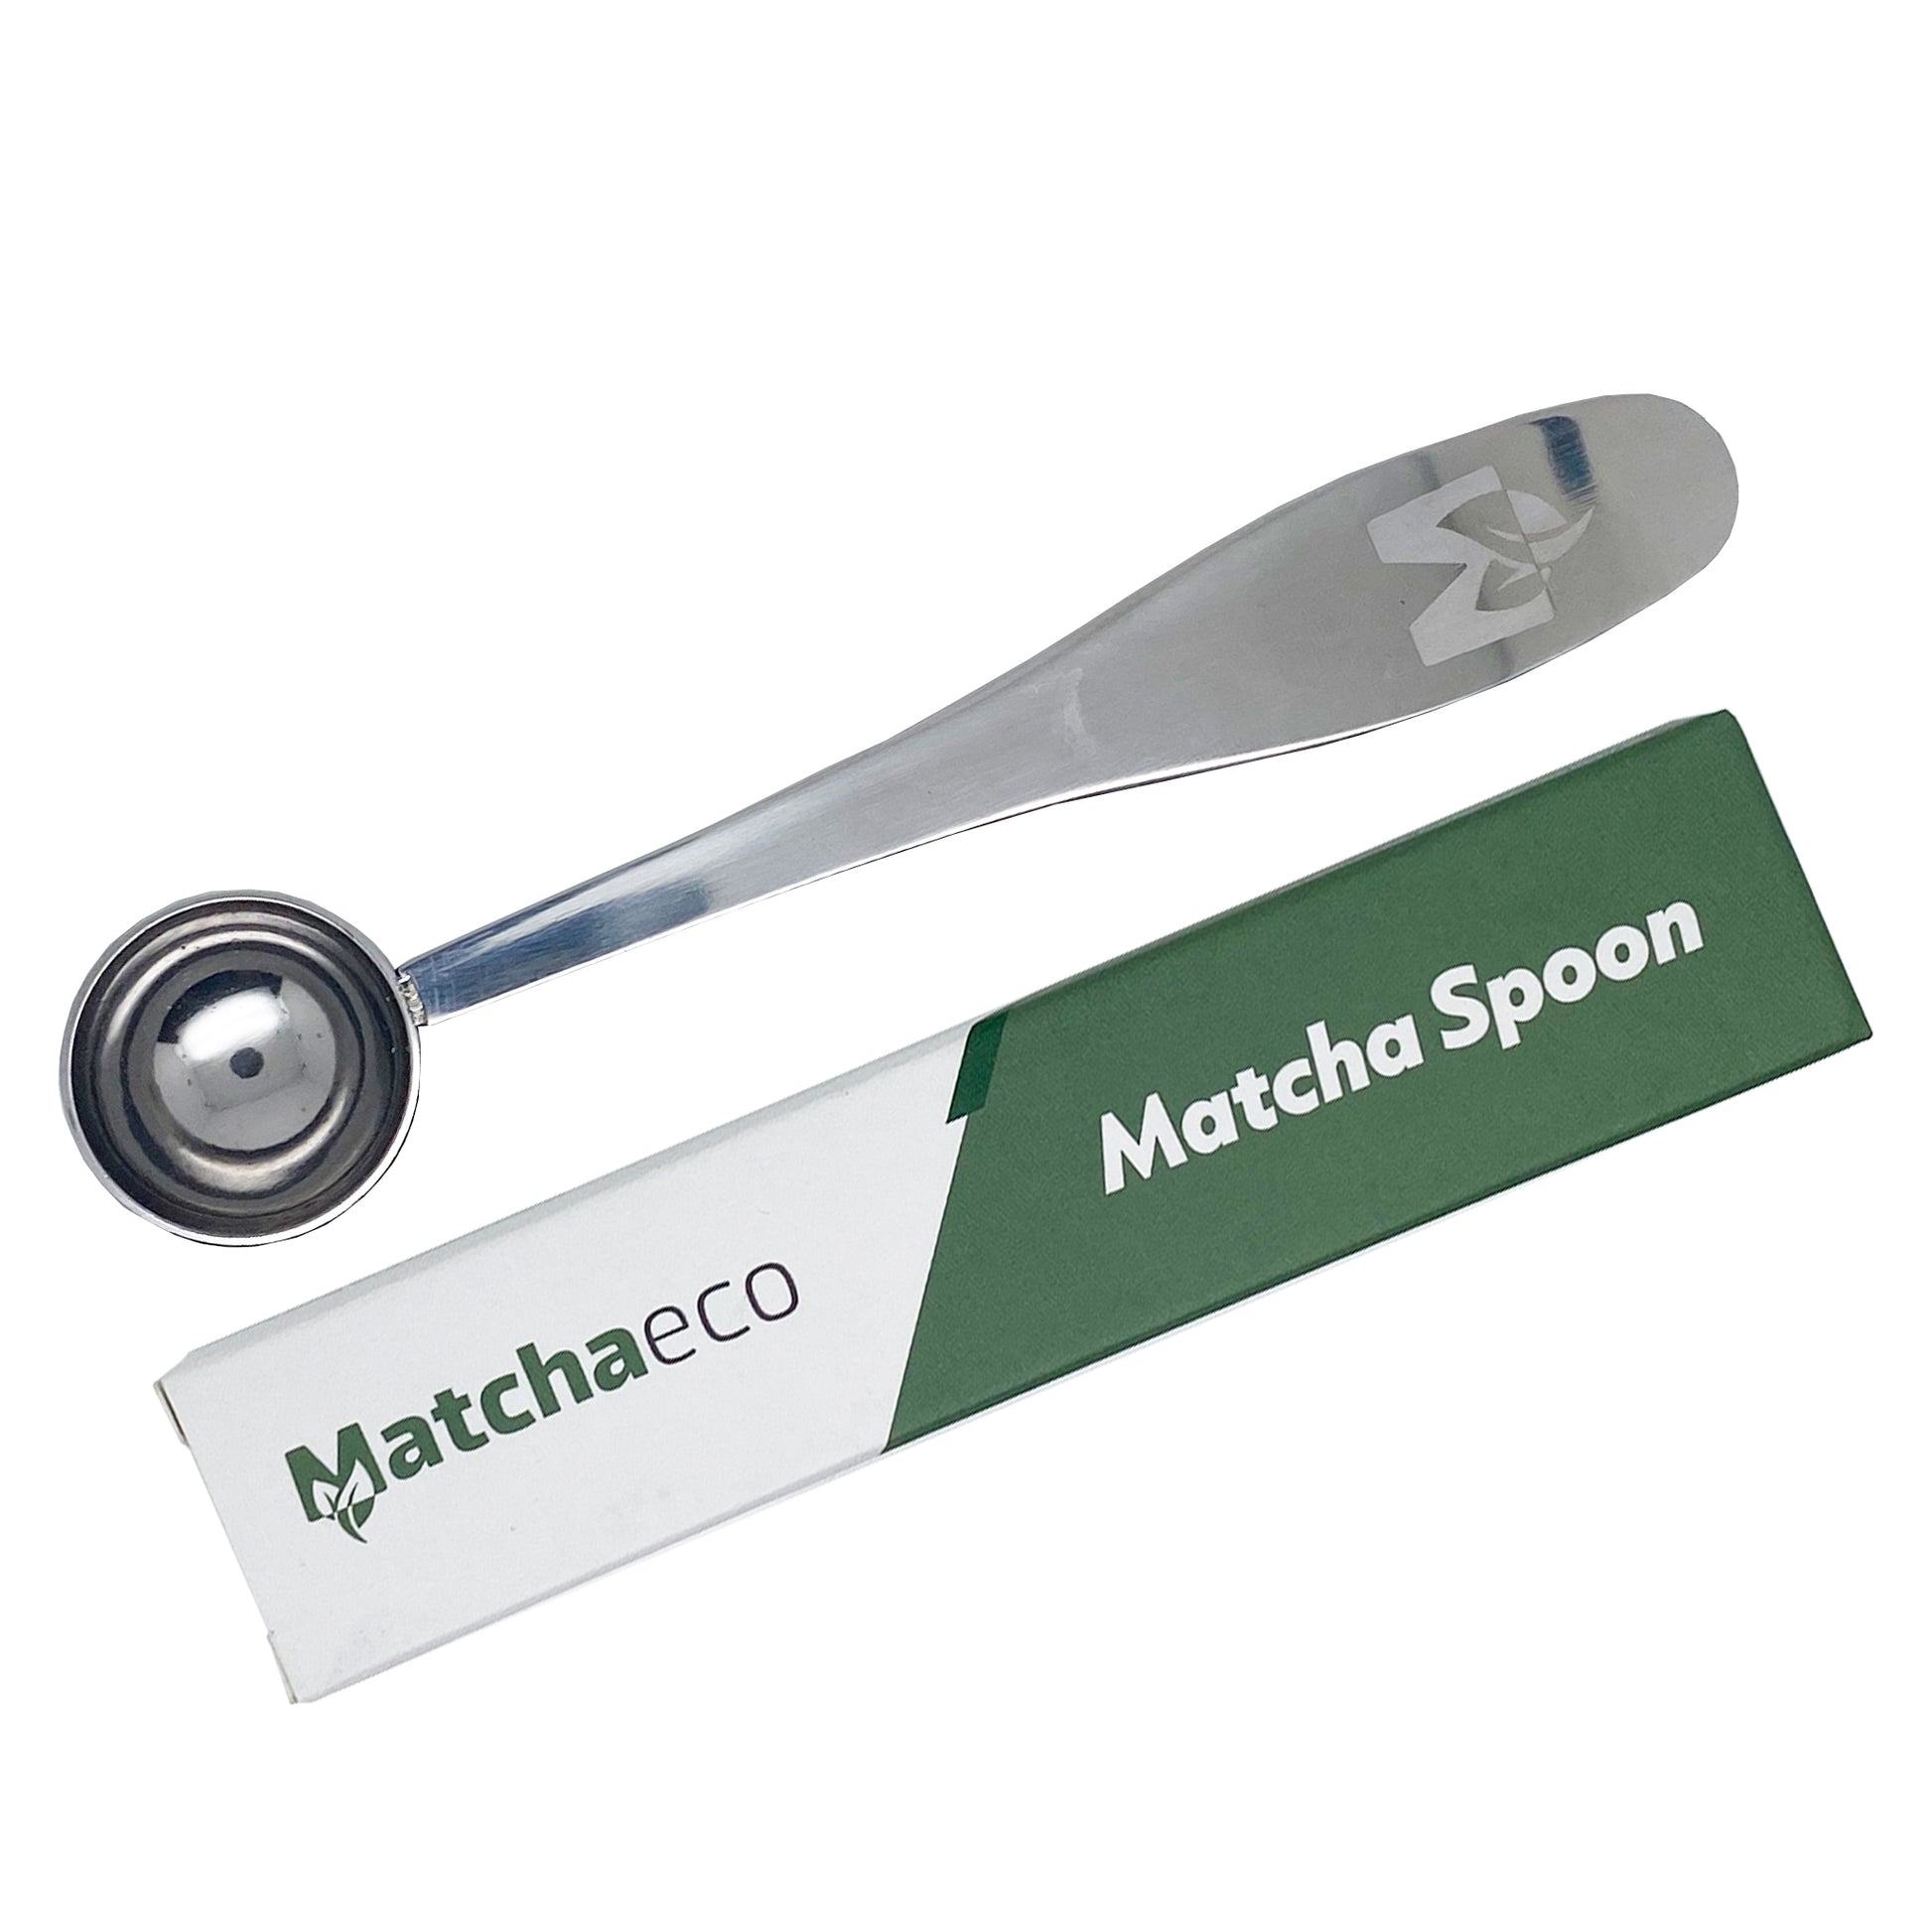 Matchaeco, 1g Matcha Tea Measuring Spoon / Scoop